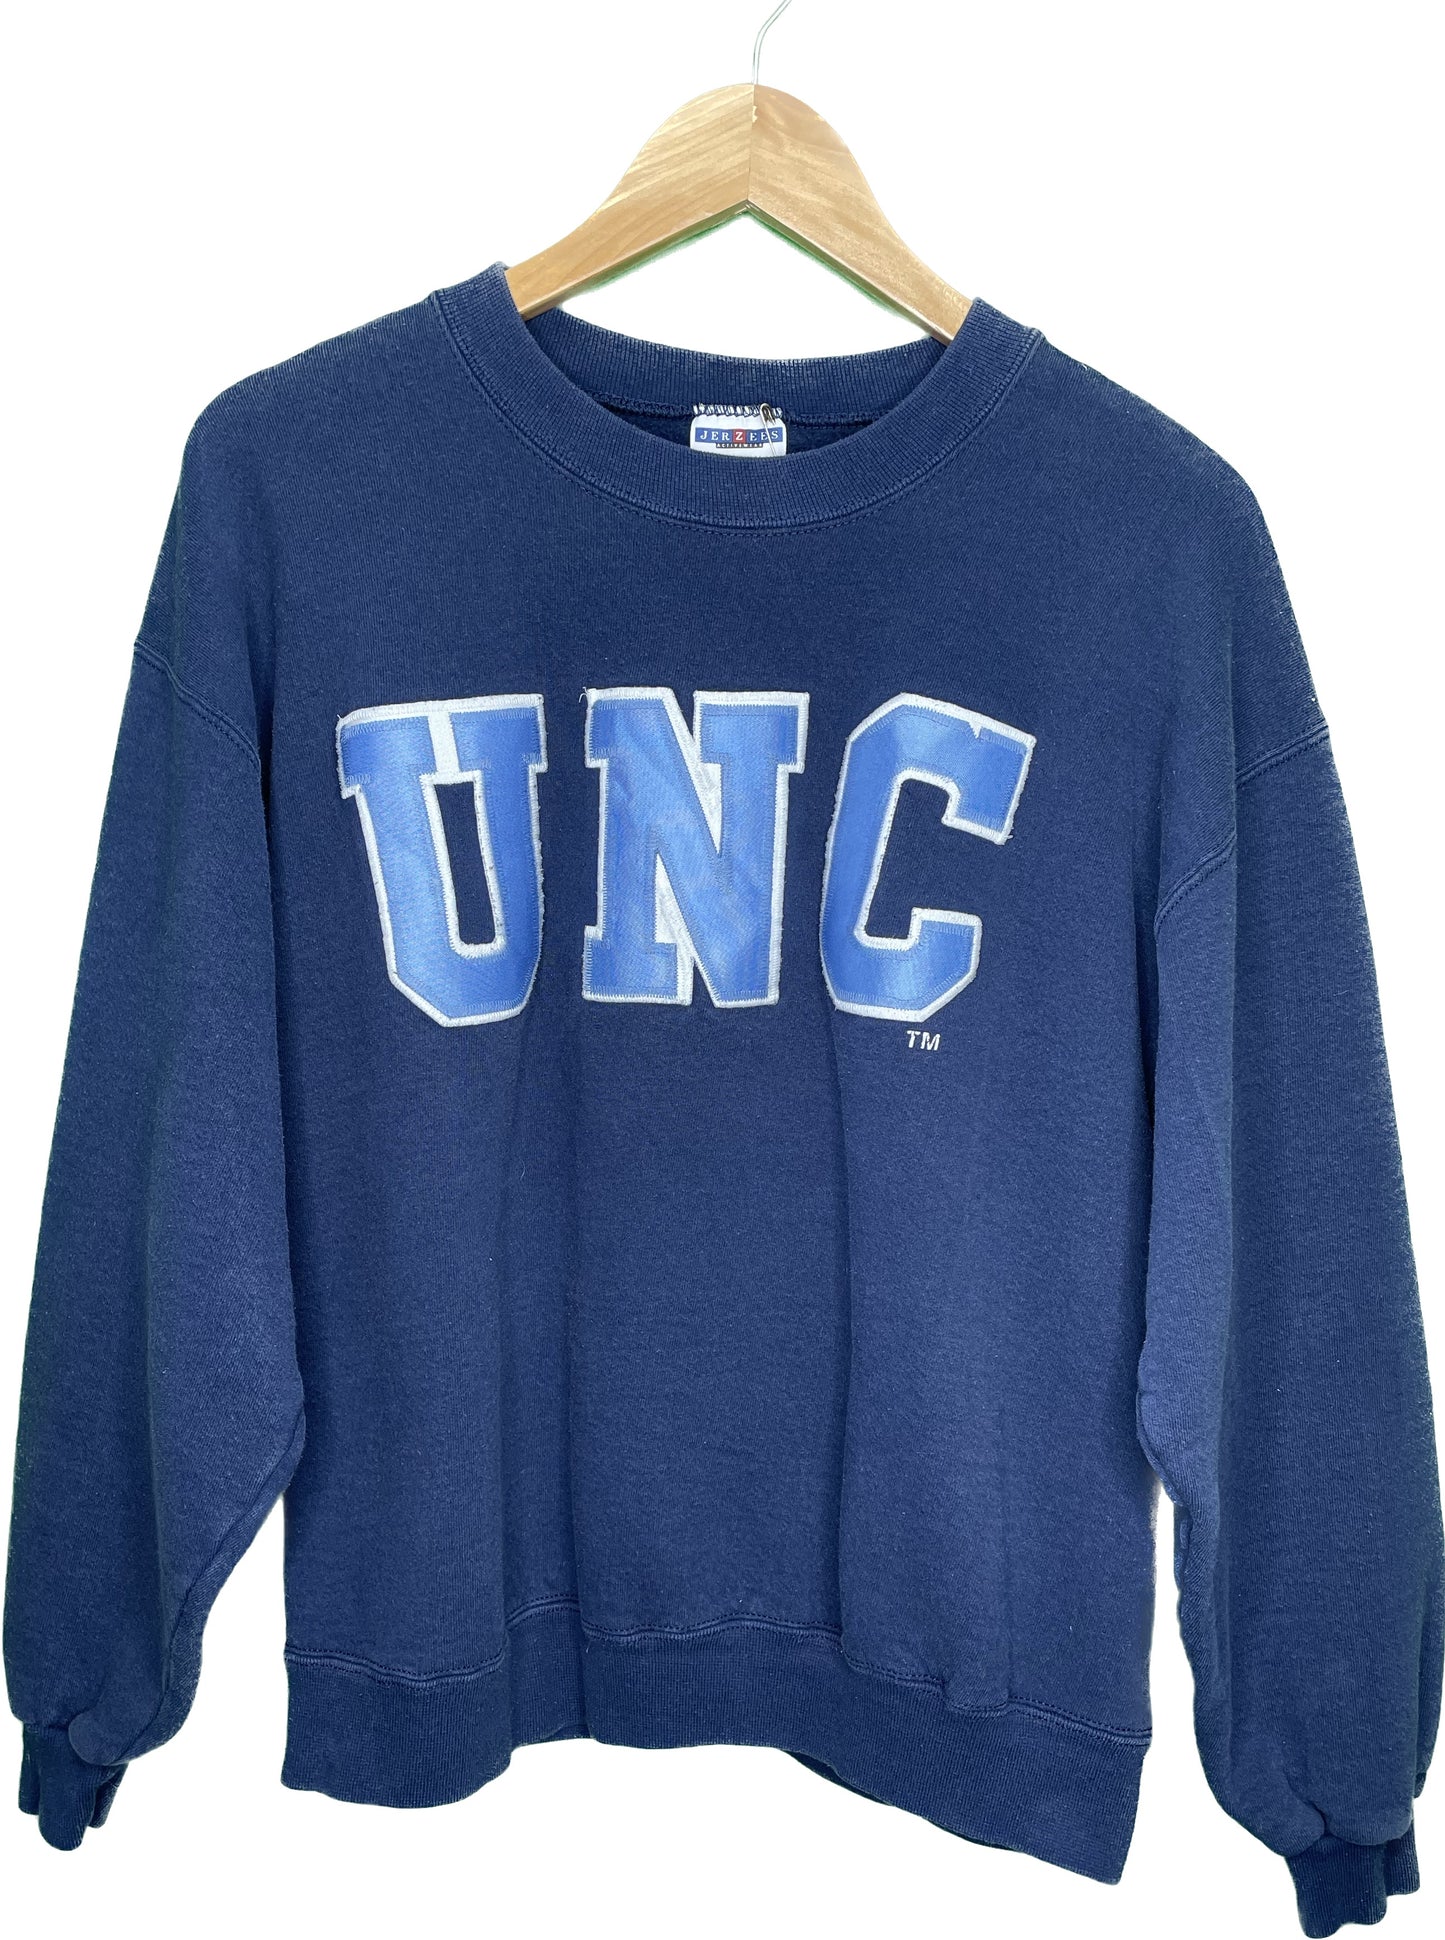 Vintage L/XL UNC Embroidered University of North Carolina College Sweatshirt